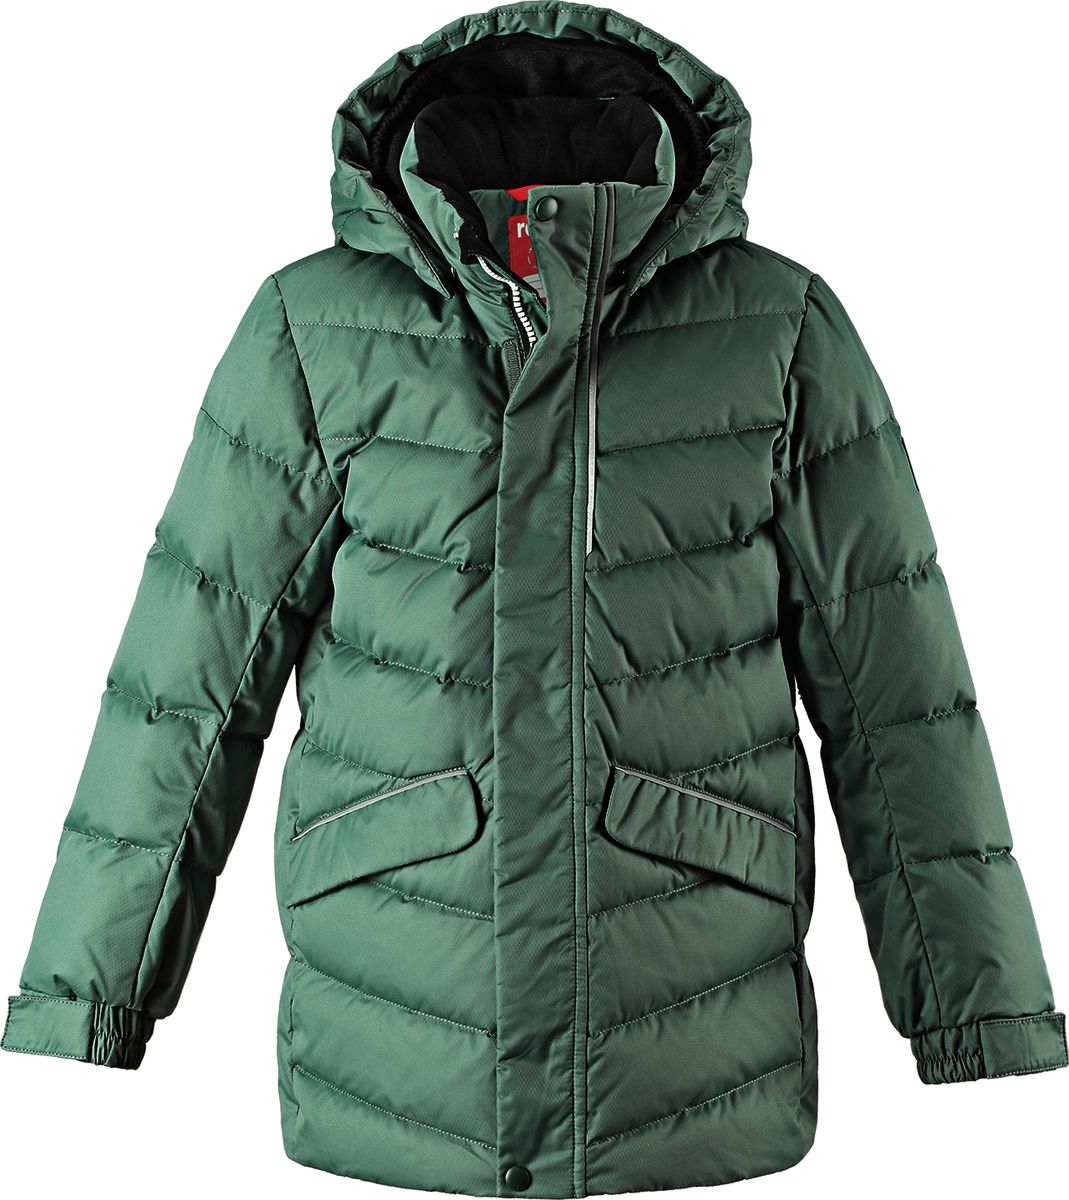 Куртка для мальчика Reima Janne, цвет: зеленый. 5313718630. Размер 140